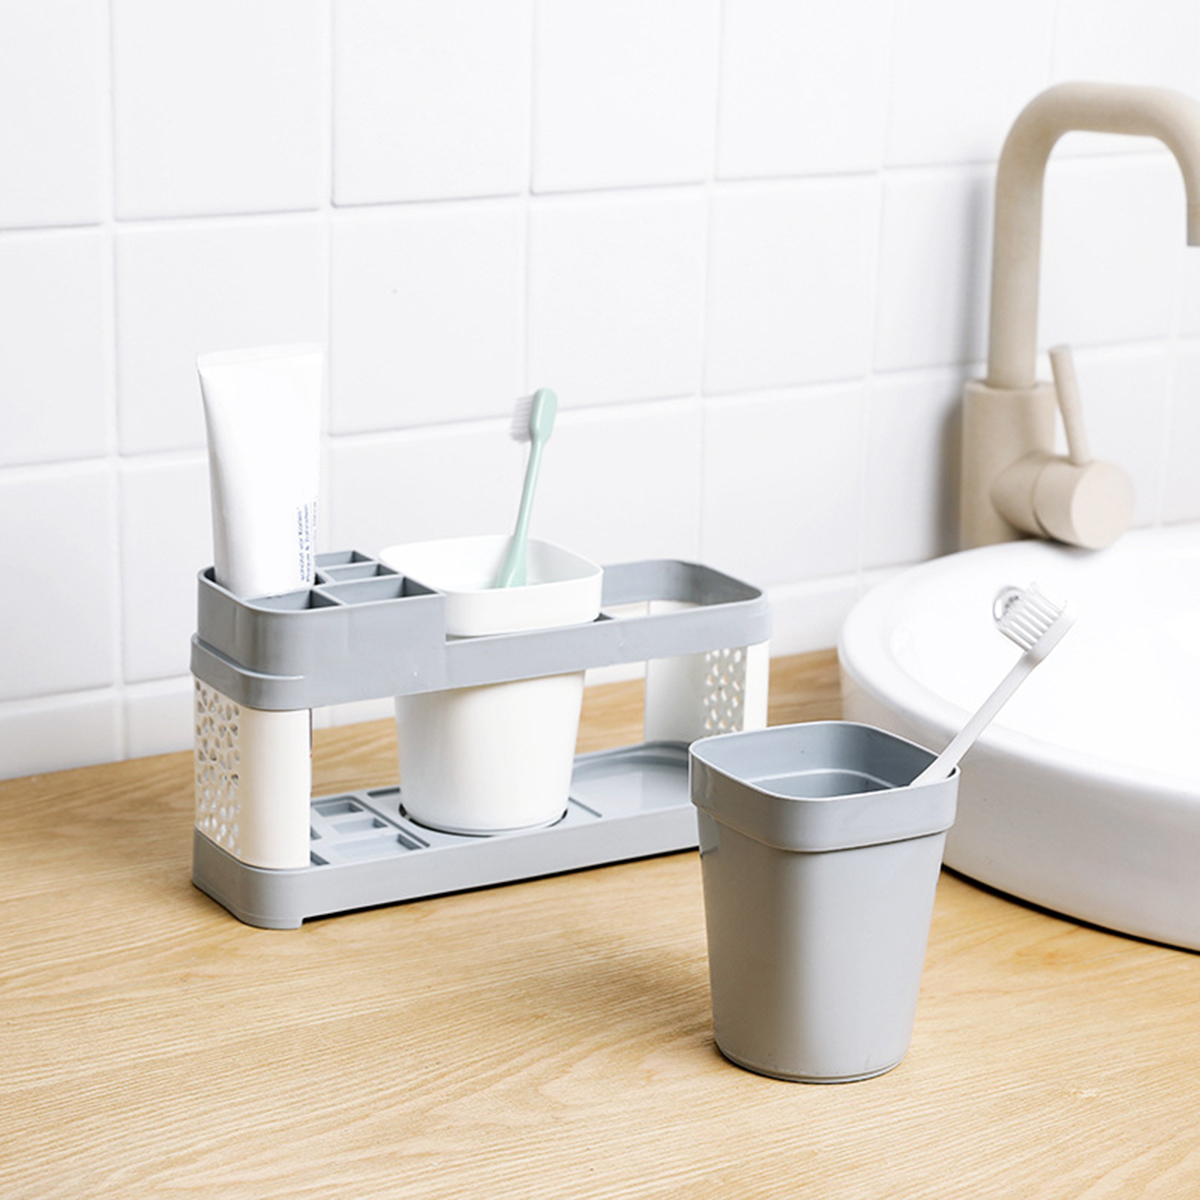 Toothbrush-Holder-Stand-Plastic-Cup-Set-Shelf-Bathroom-Toothpaste-Storage-Rack-1402010-8